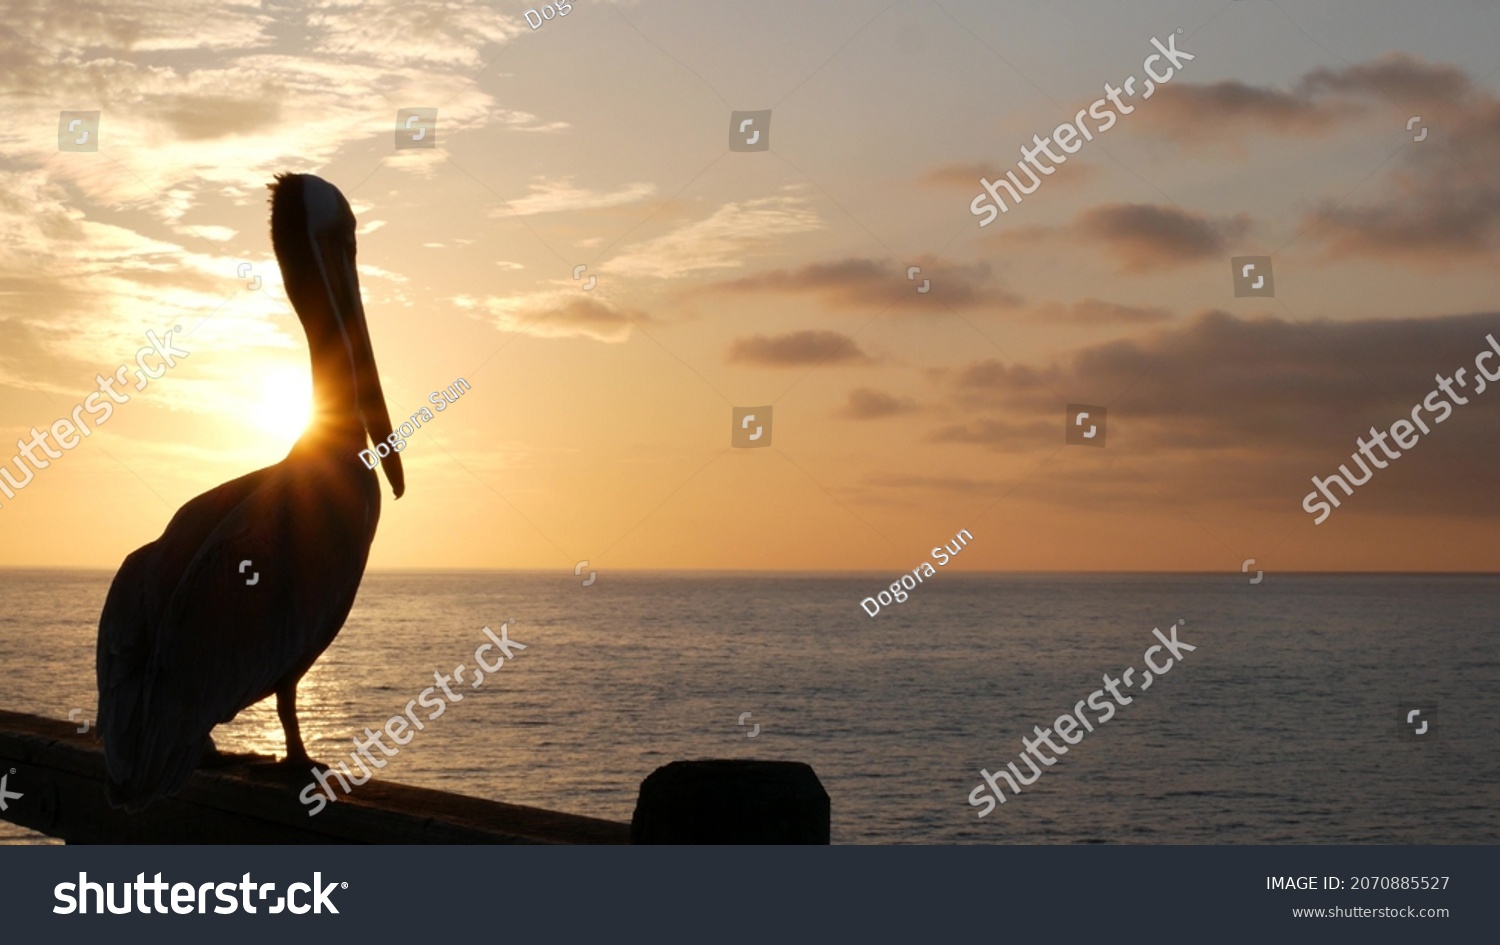 Wild pelican on wooden pier railing, Oceanside boardwalk, California ocean beach, USA wildlife. Pelecanus by sea water. Big bird in freedom close up, contrast silhouette at sunset. Large bill beak. #2070885527